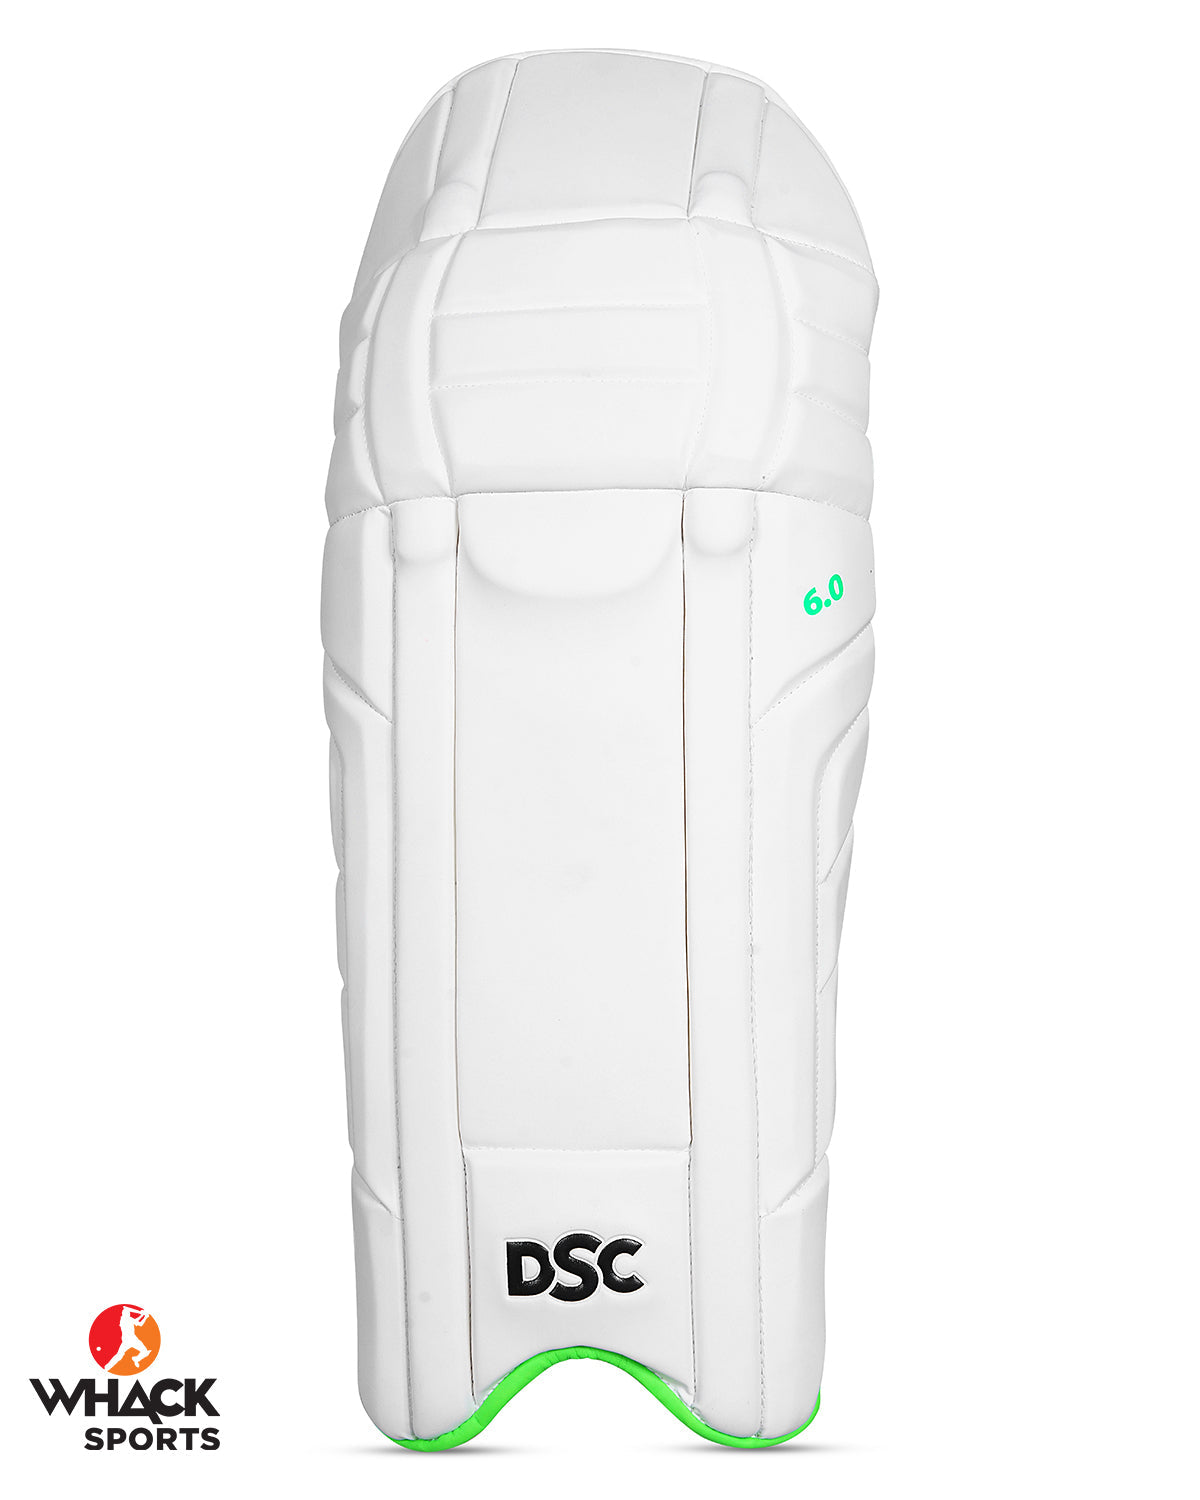 DSC 6.0 Cricket Batting Pads - Adult